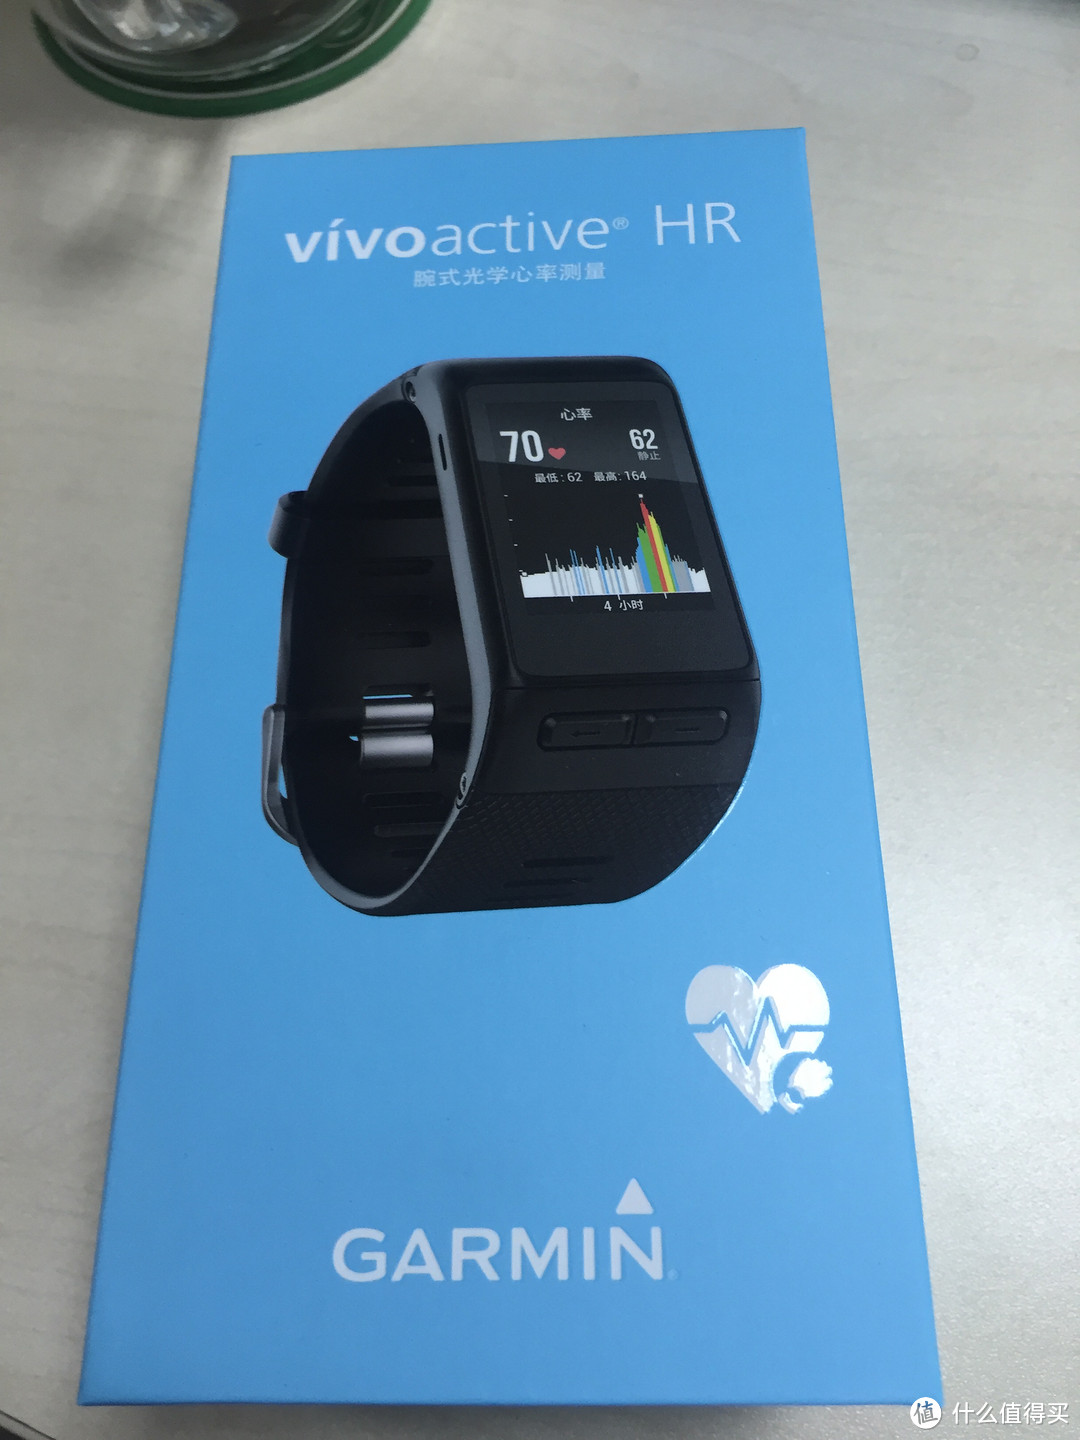 GARMIN 佳明 vivoactive HR 智能手表 开箱